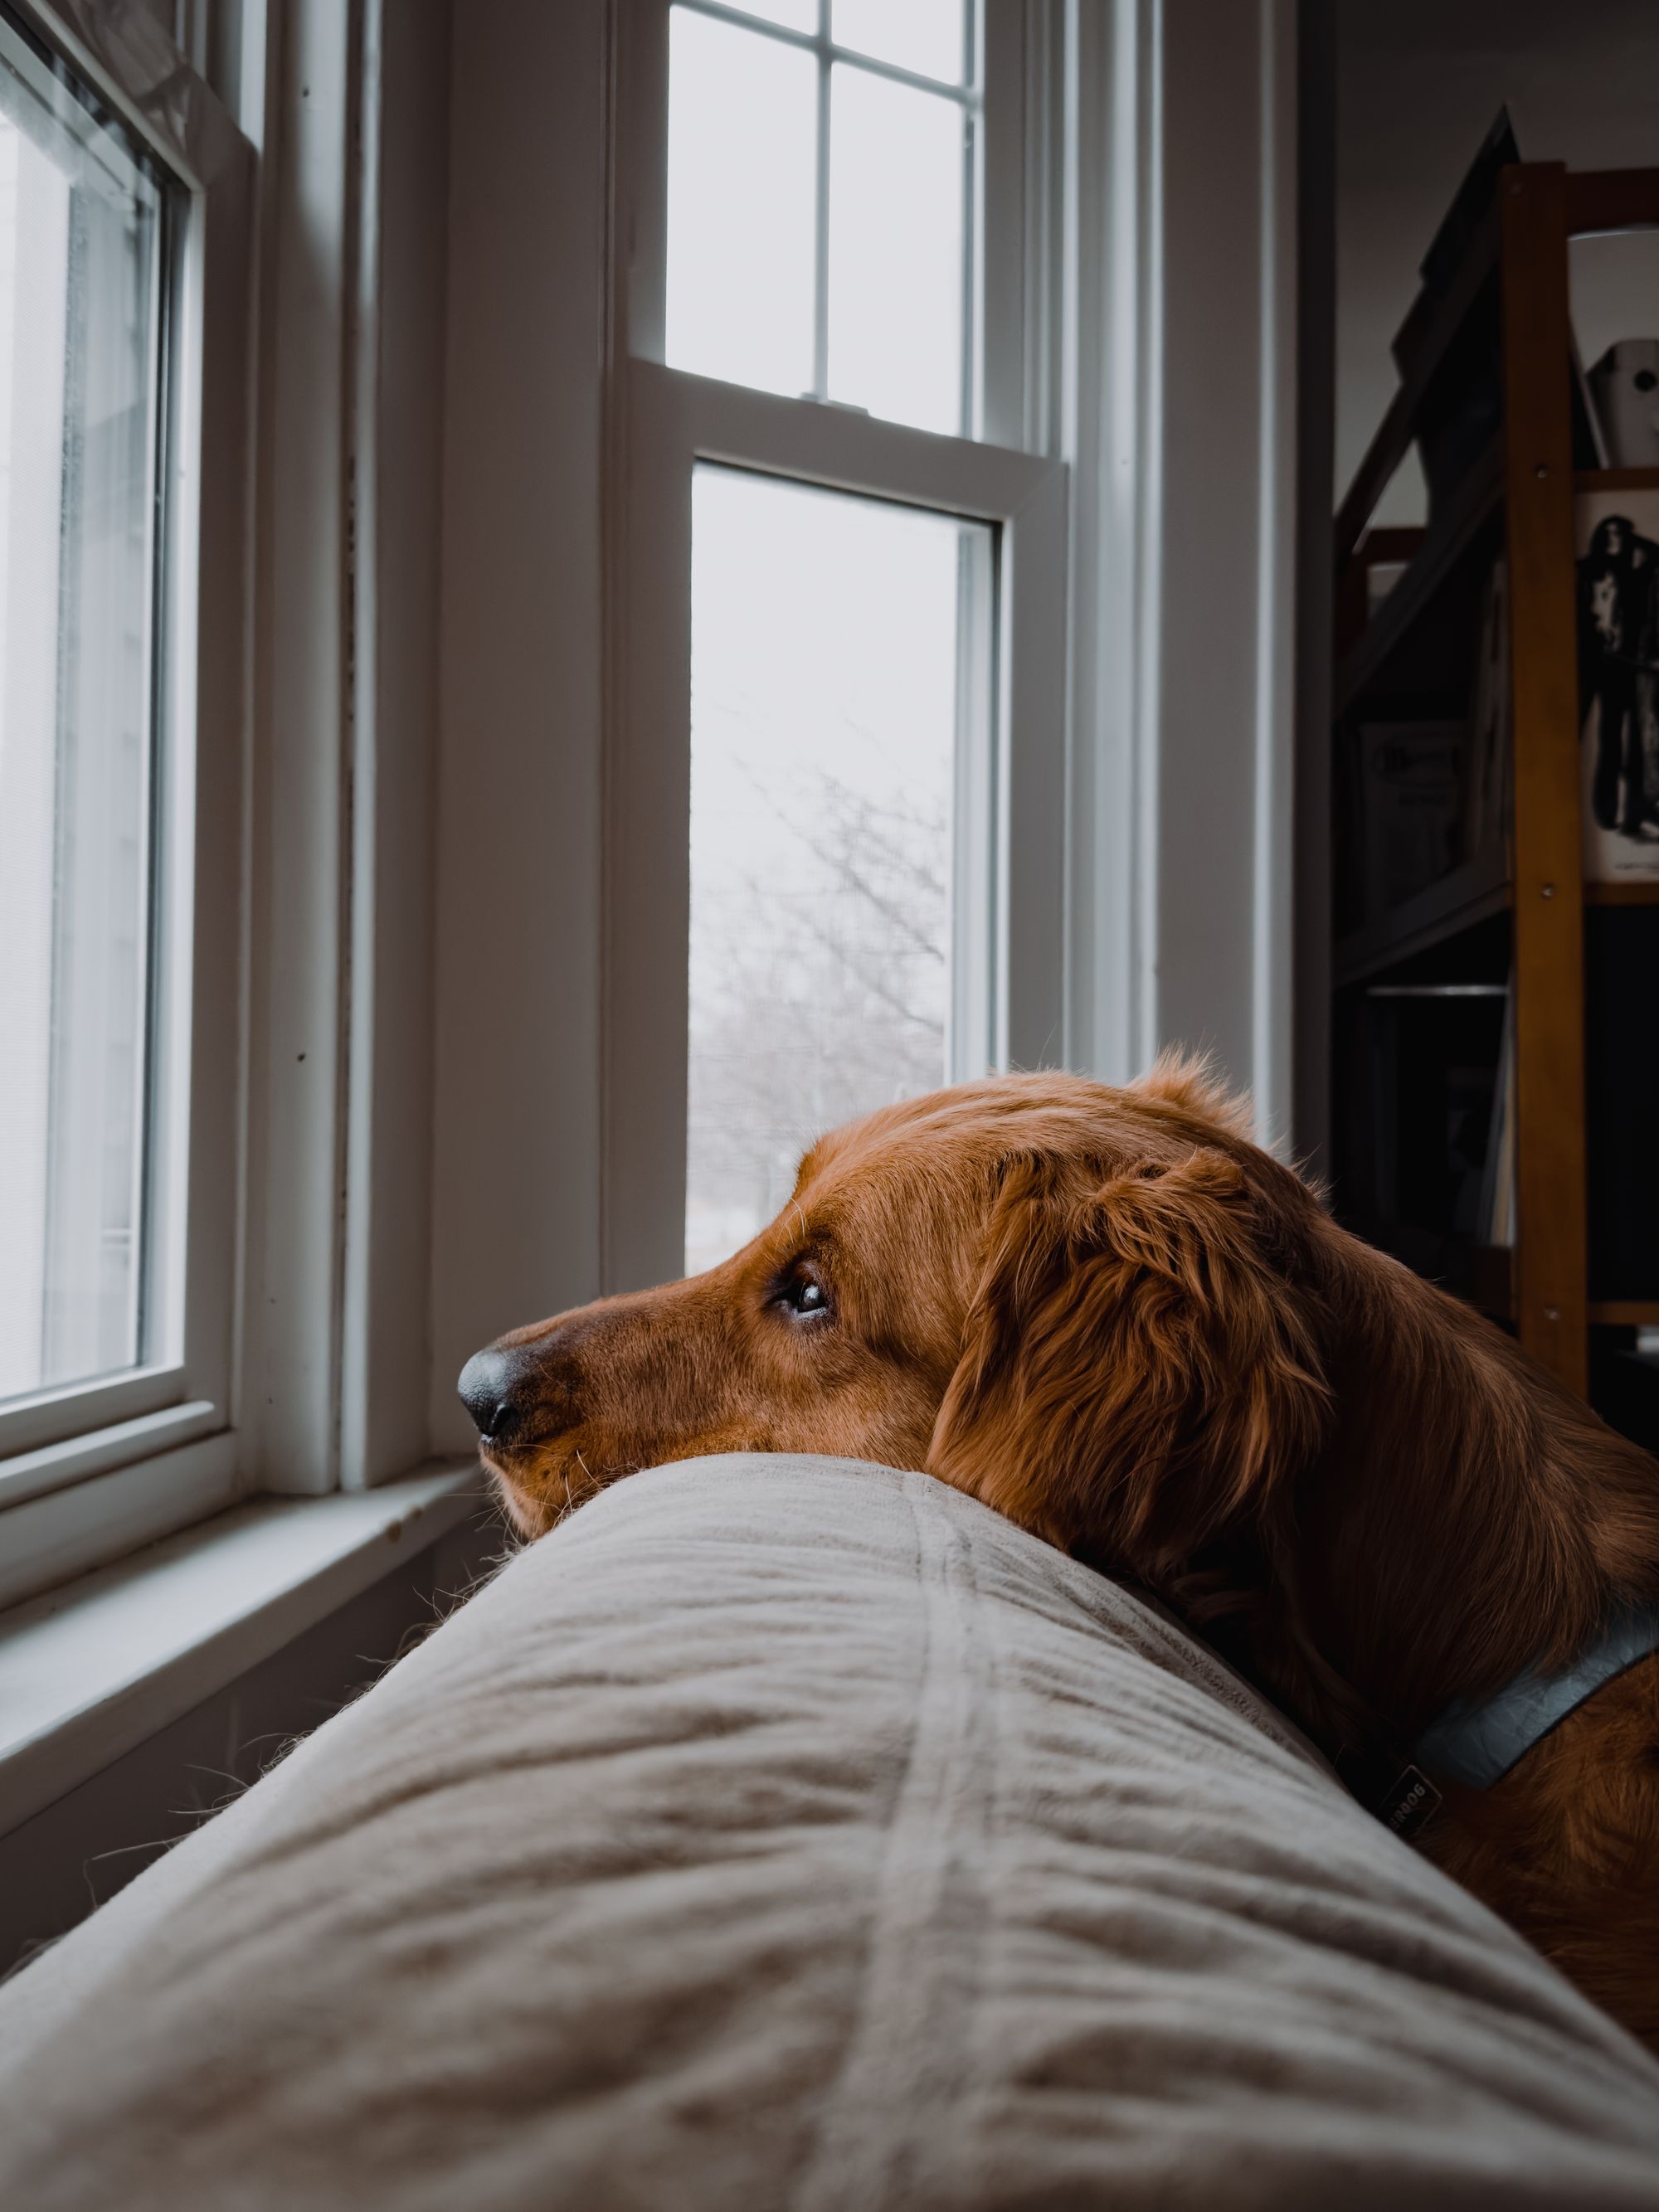 Murph (dog) looks out the window as it rains